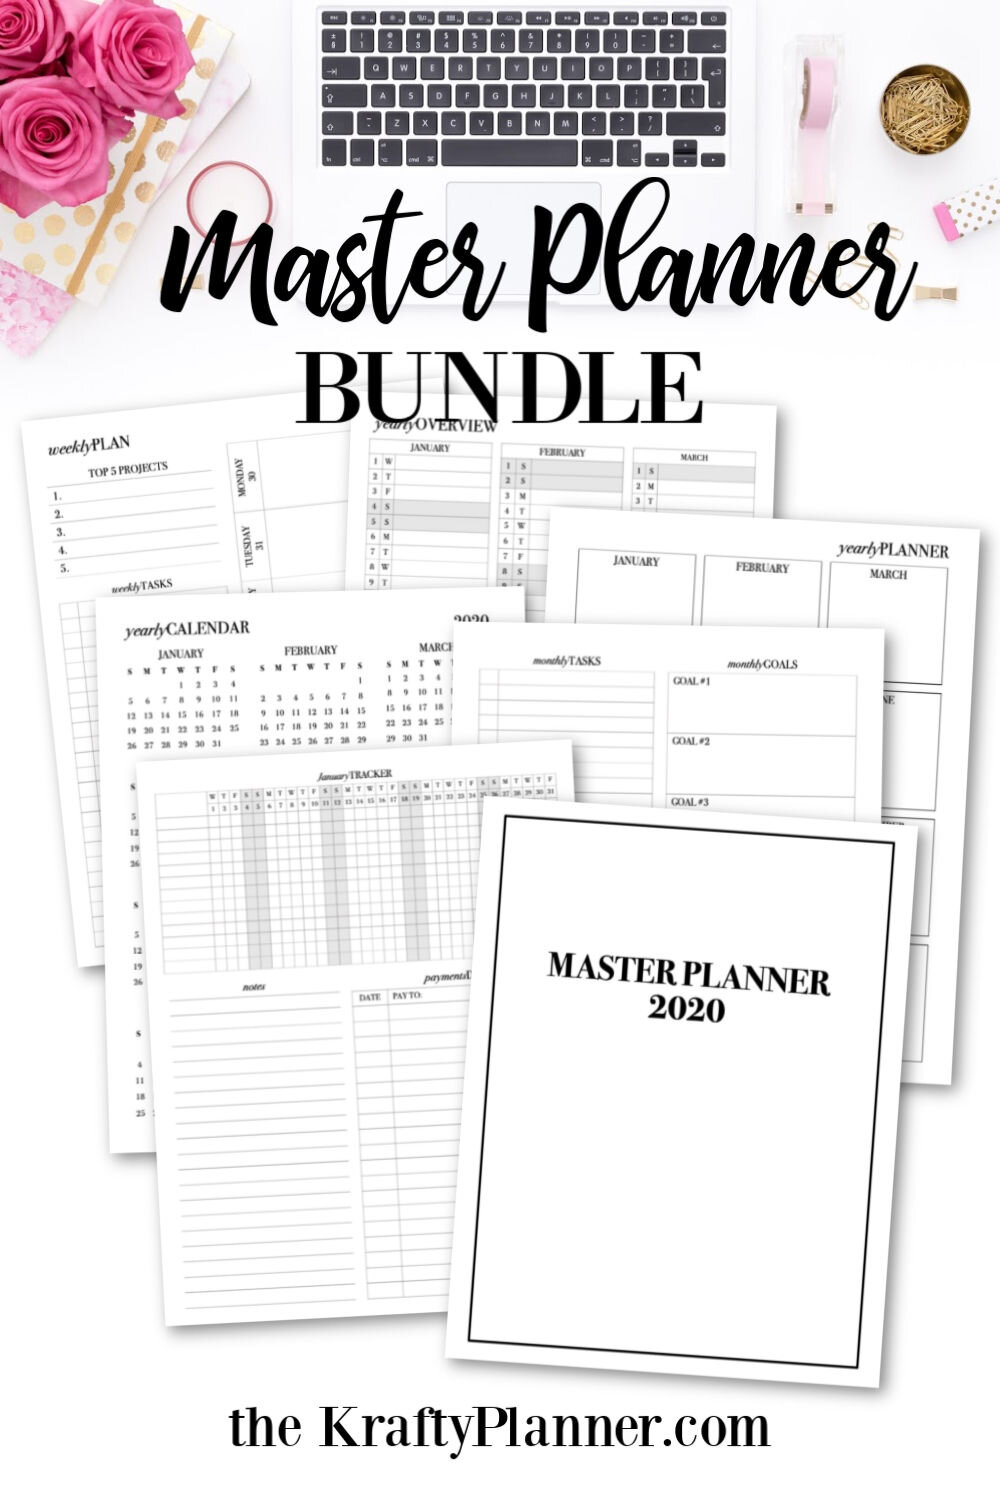 Master Planner Bundle.jpg